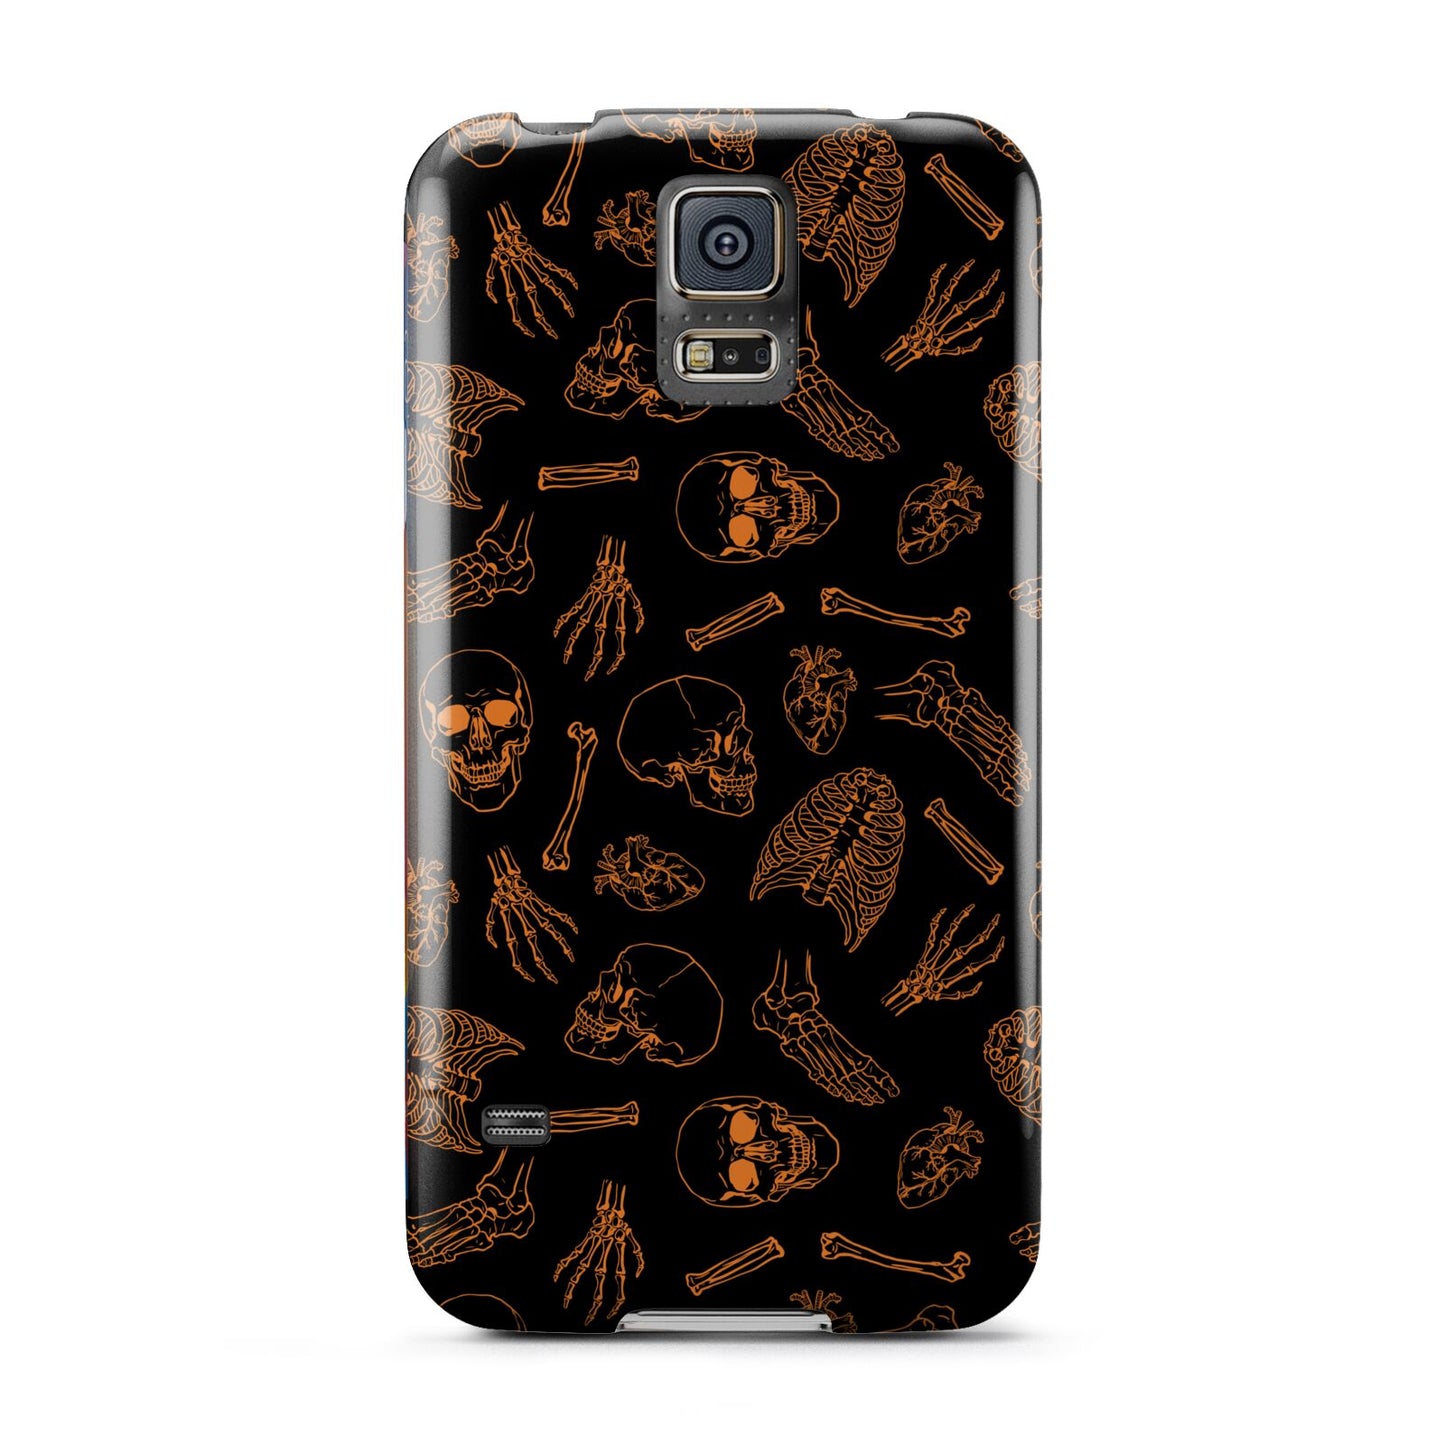 Orange Skeleton Illustrations Samsung Galaxy S5 Case